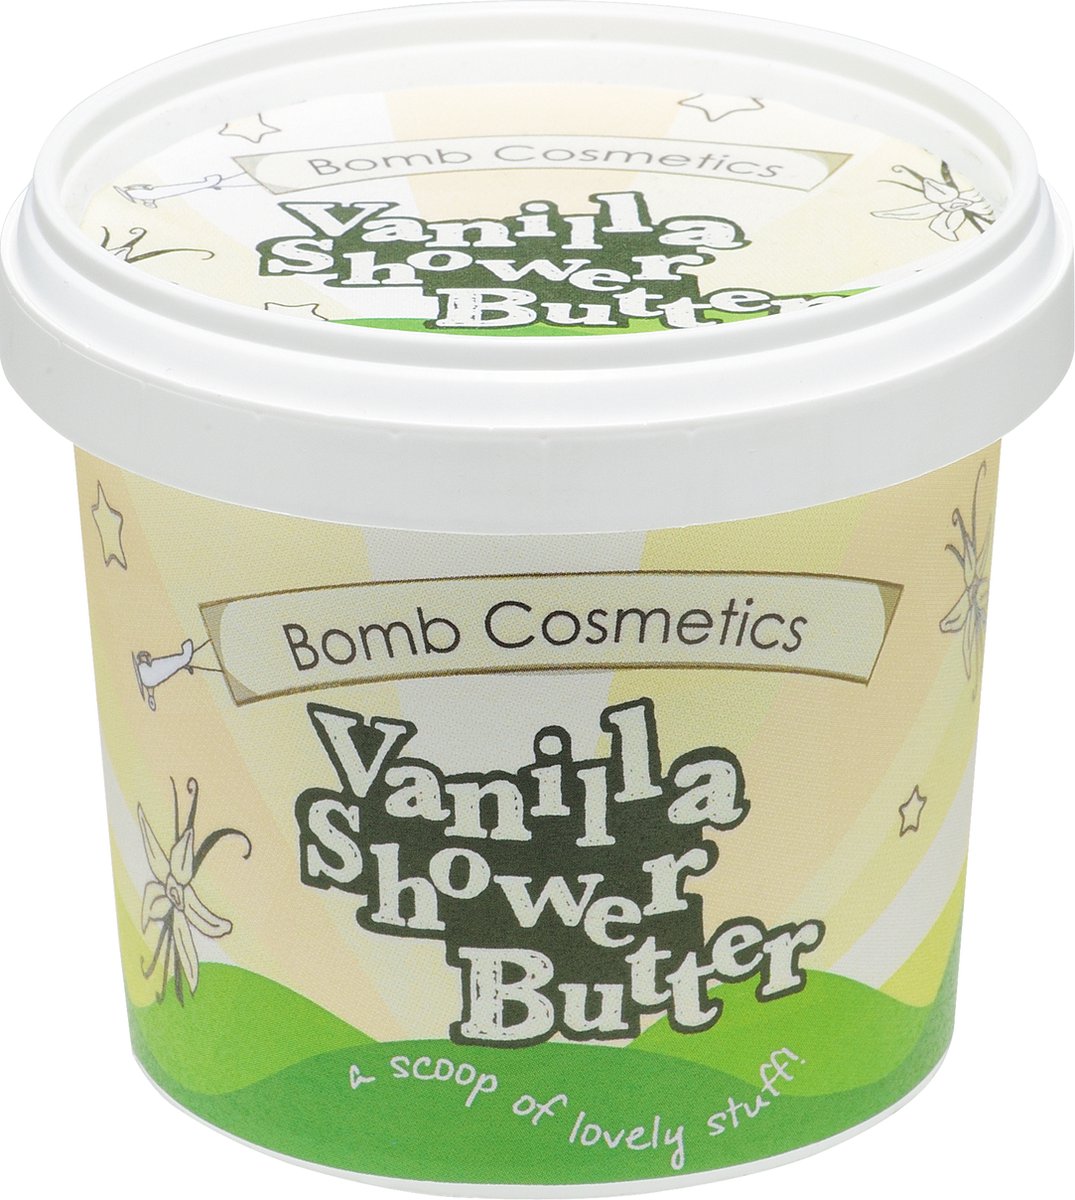 Bomb Cosmetics Shower Butter Vanilla